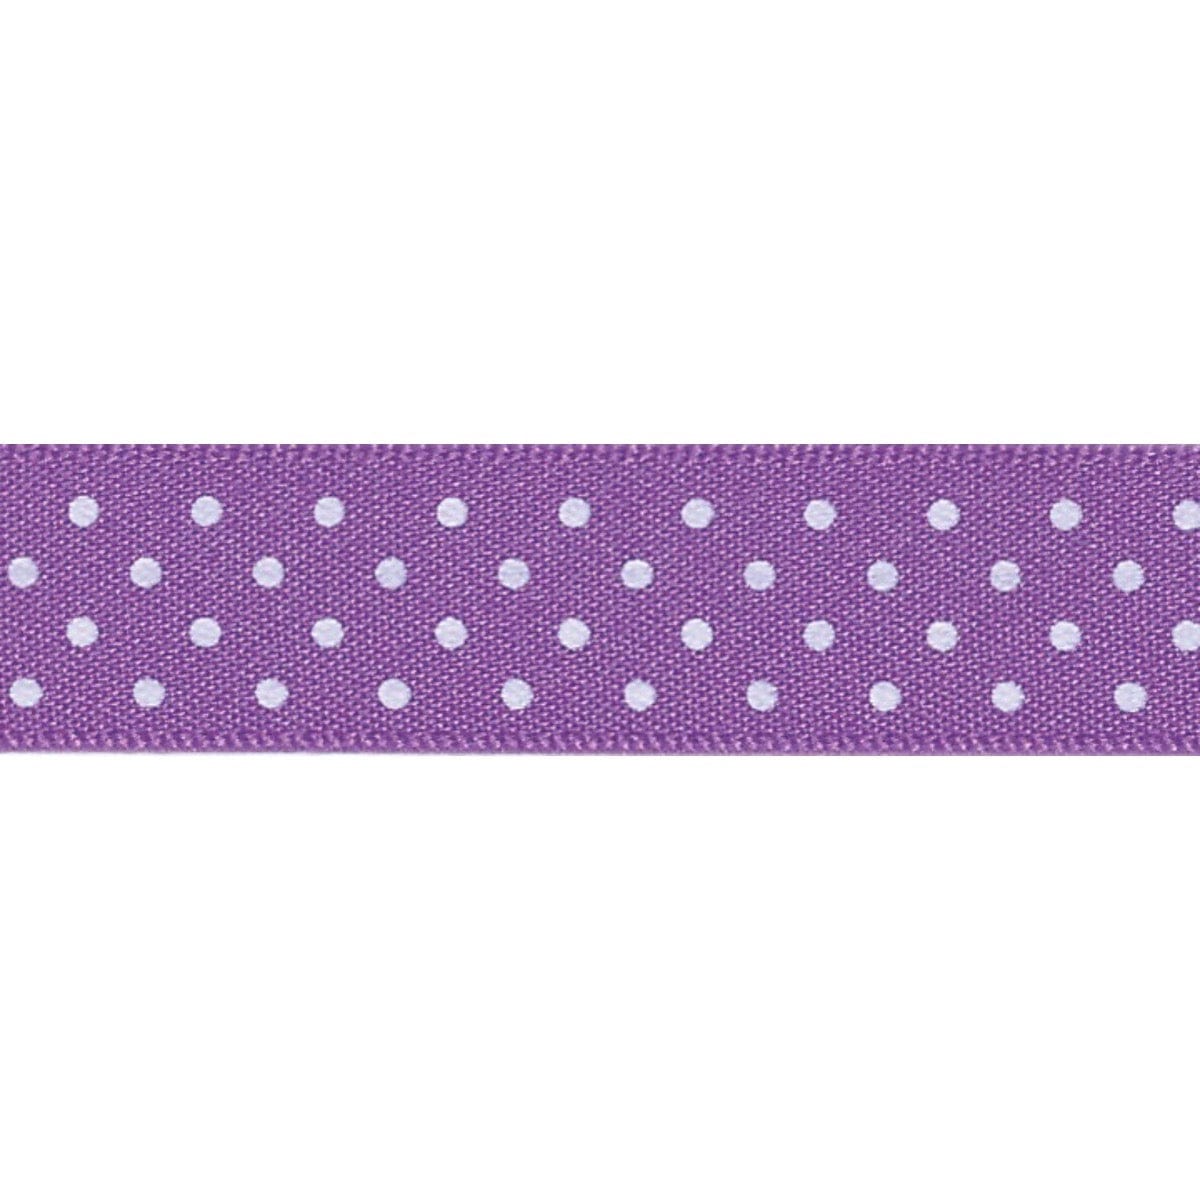 Micro Dot Ribbon: Purple and white 15mm wide: Price per metre.